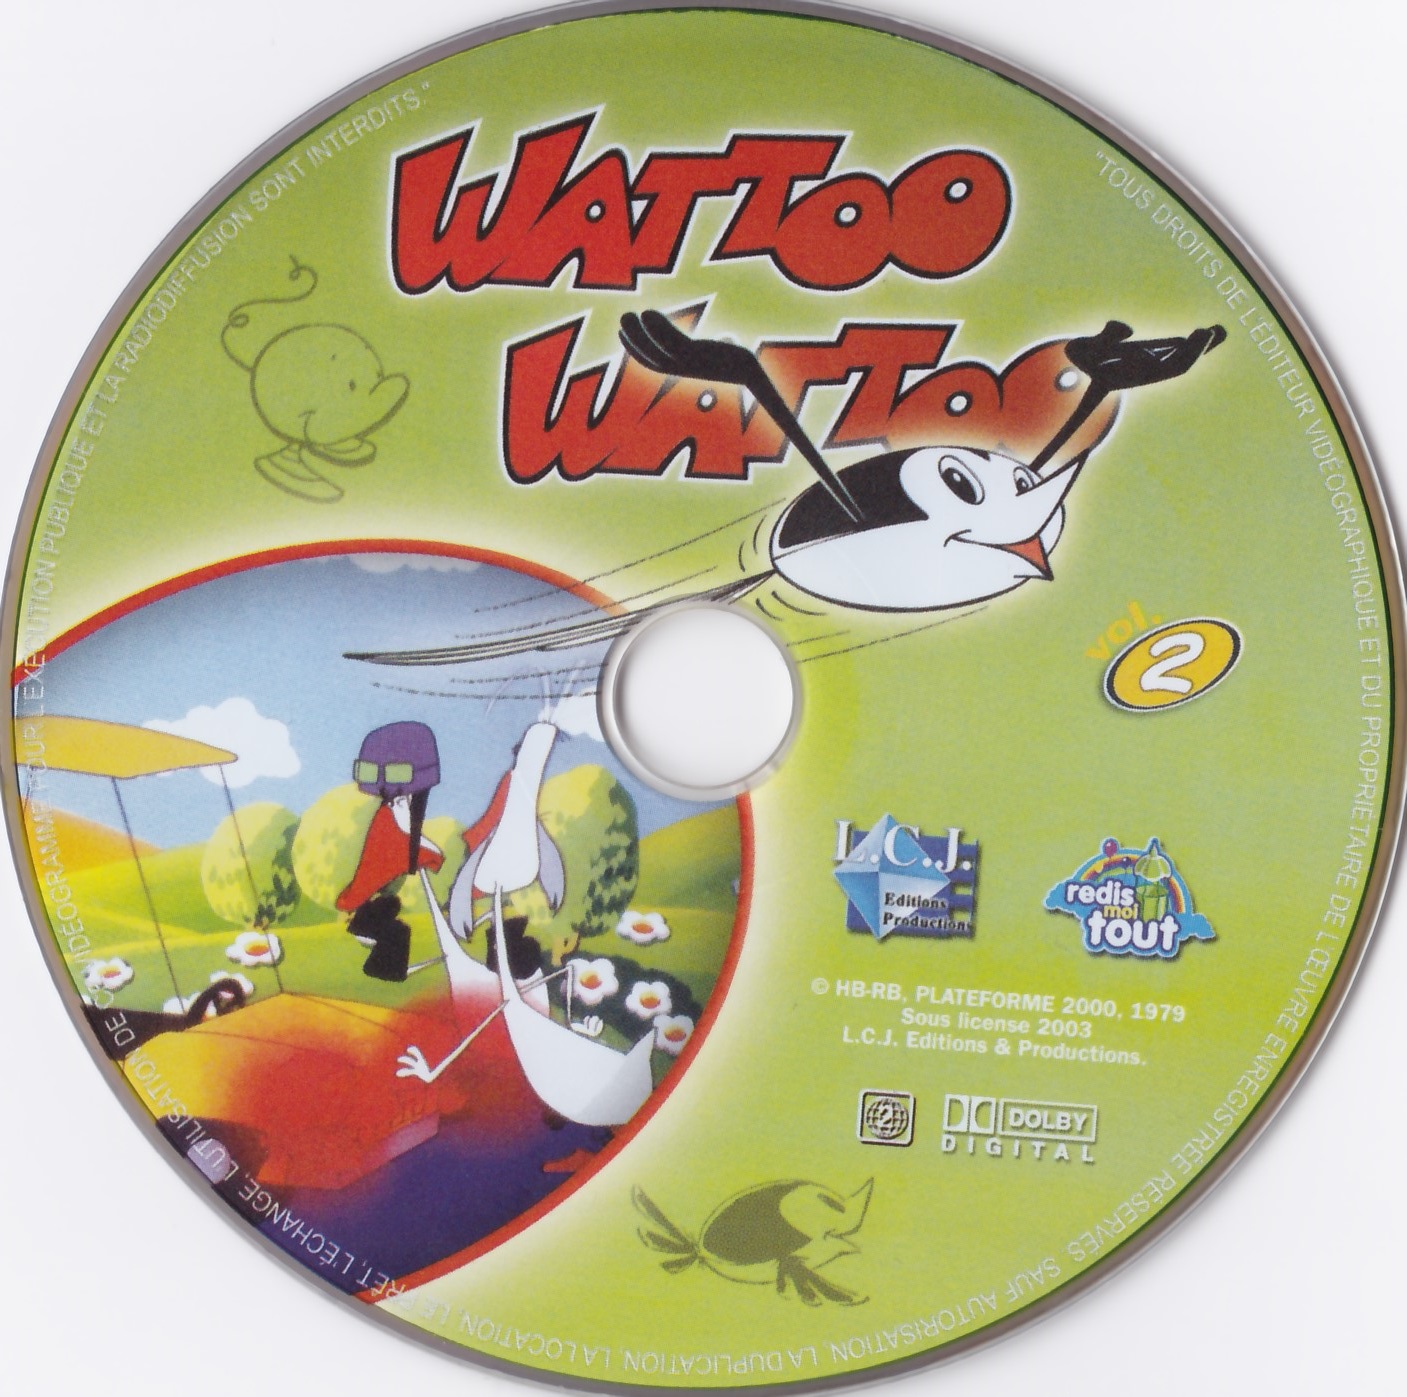 Wattoo Wattoo vol 2